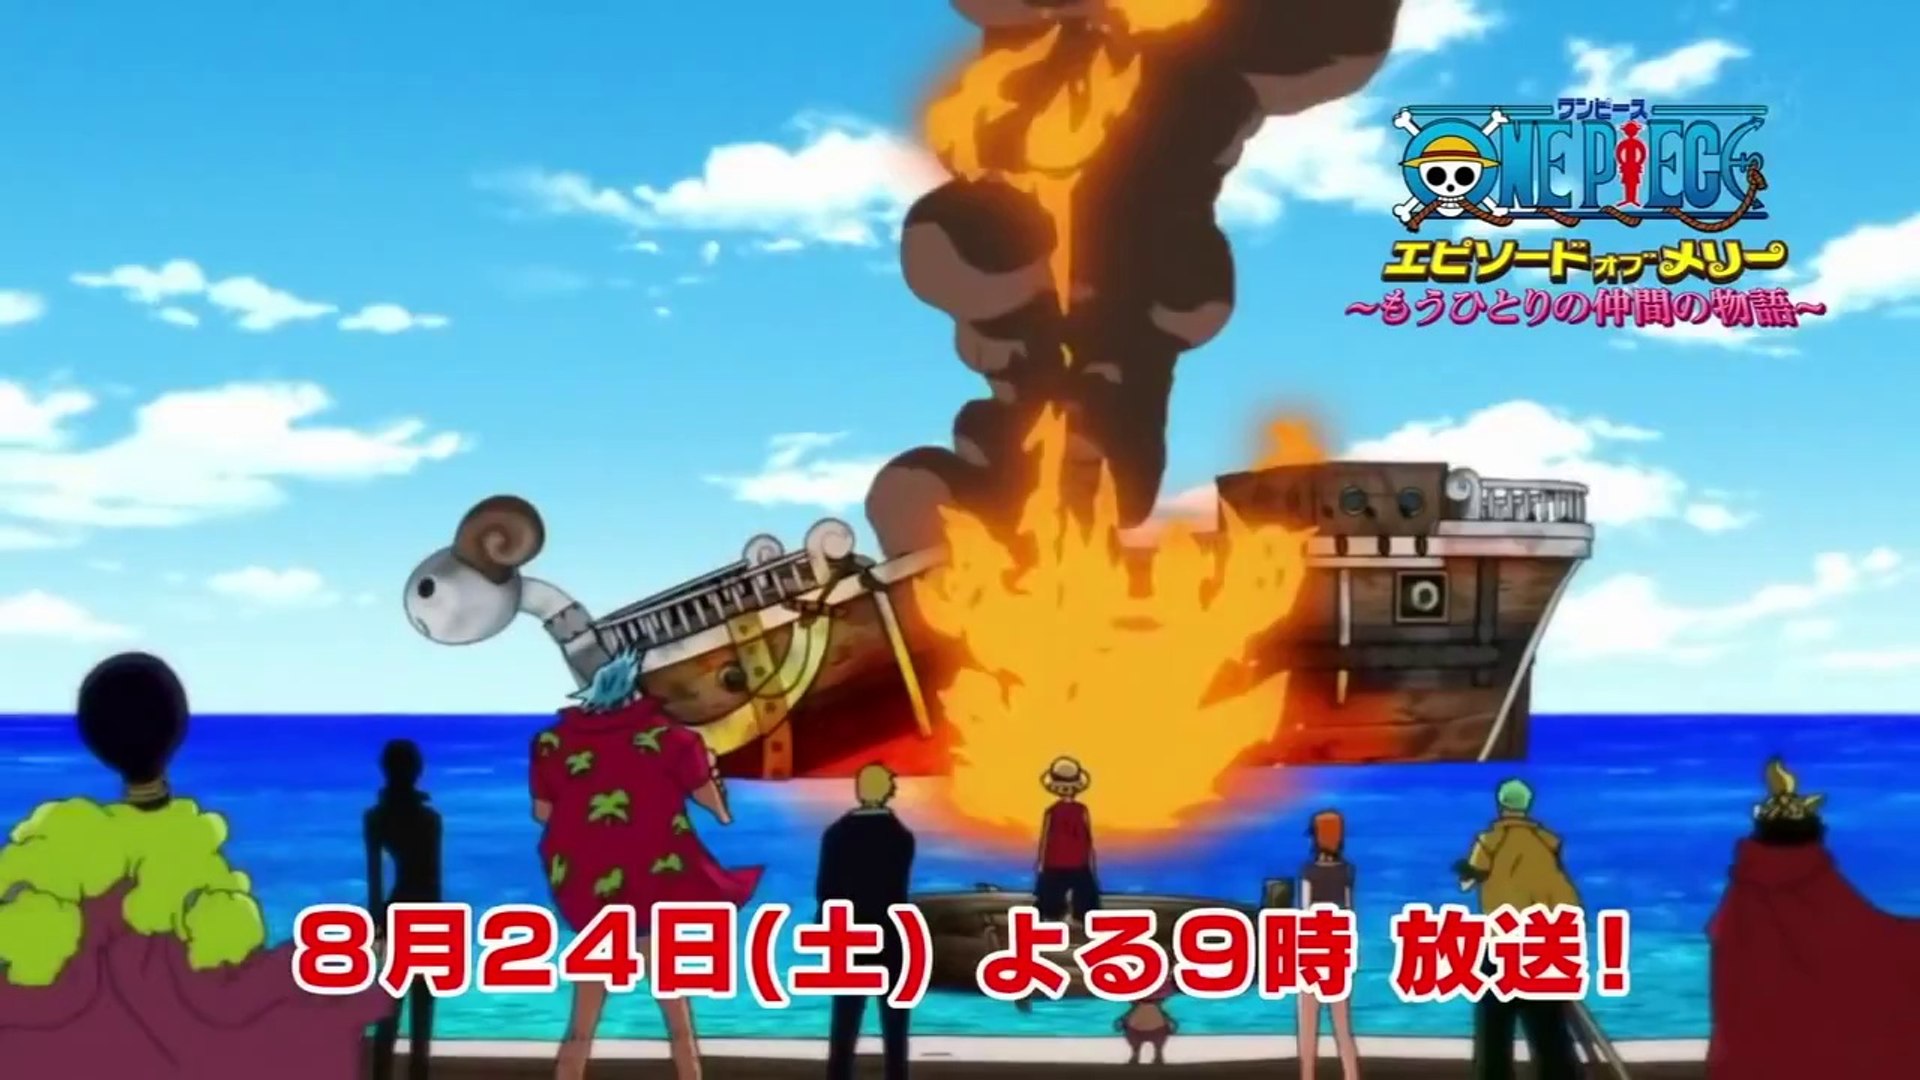 PV】One Piece: Episode of Merry - Mou Hitori no Nakama no